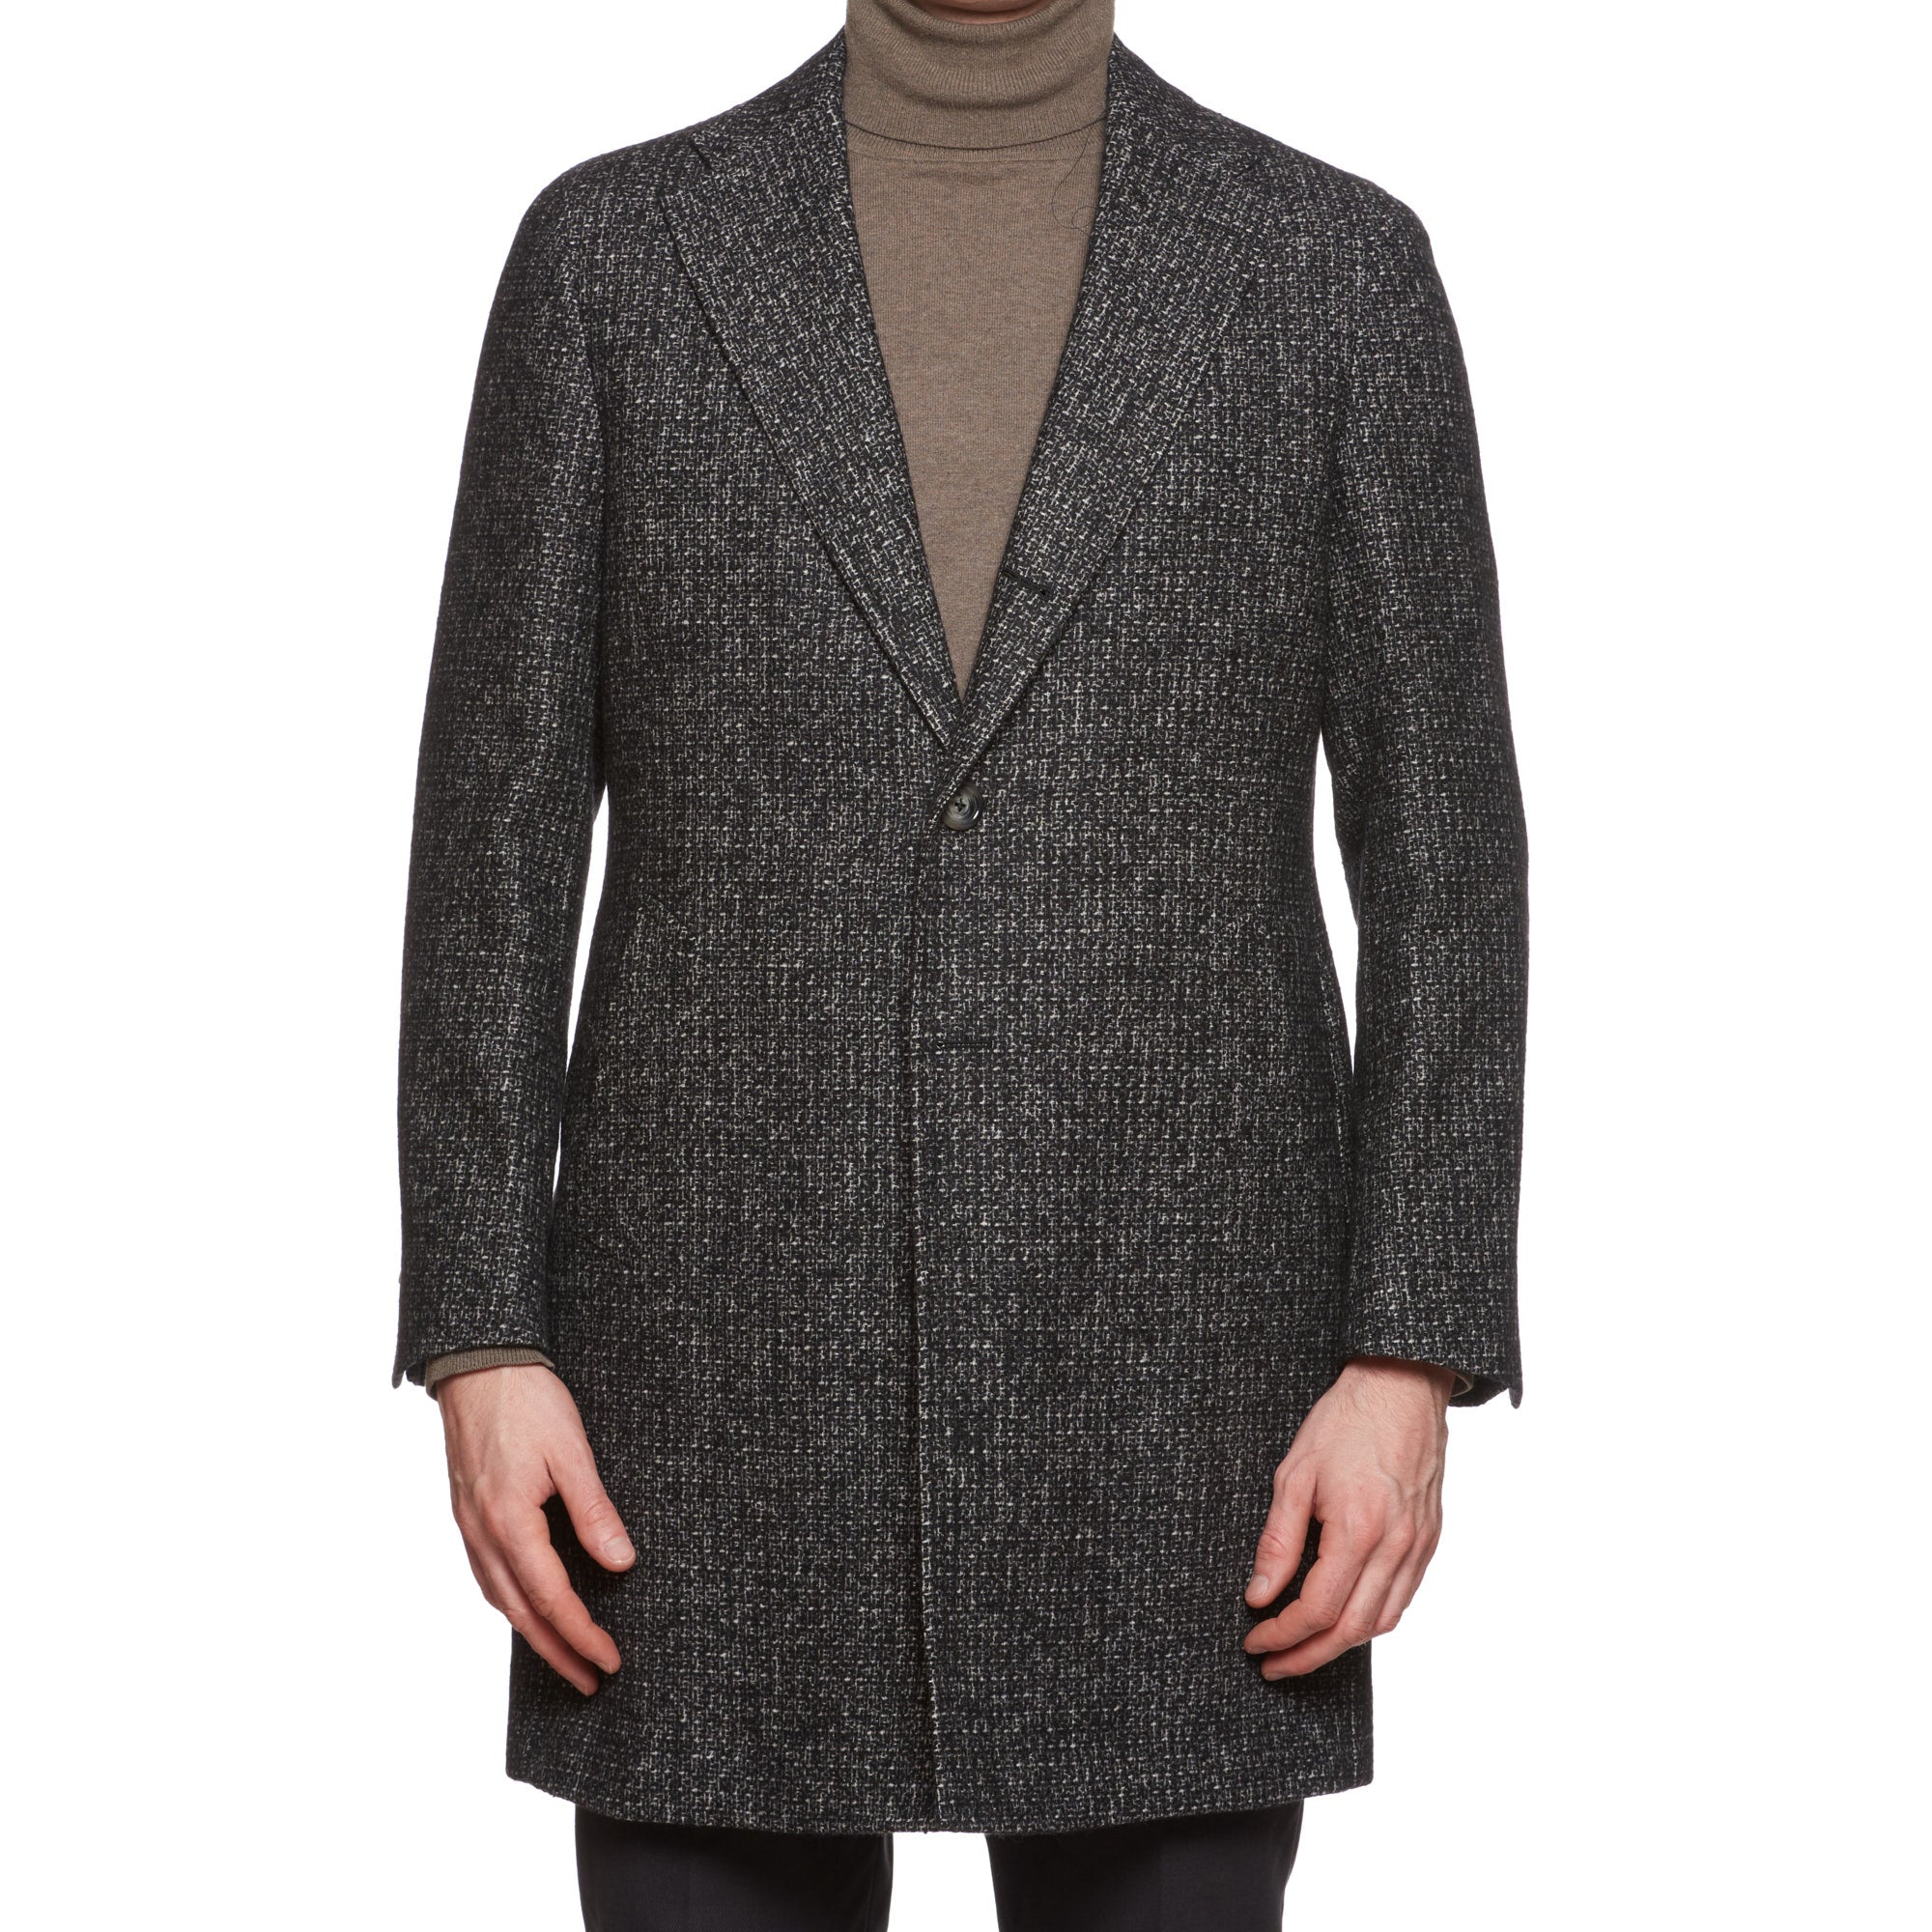 VINCENZO PALUMBO Napoli "Viky" Dark Gray Wool Back Belted Jacket Coat NEW VINCENZO PALUMBO